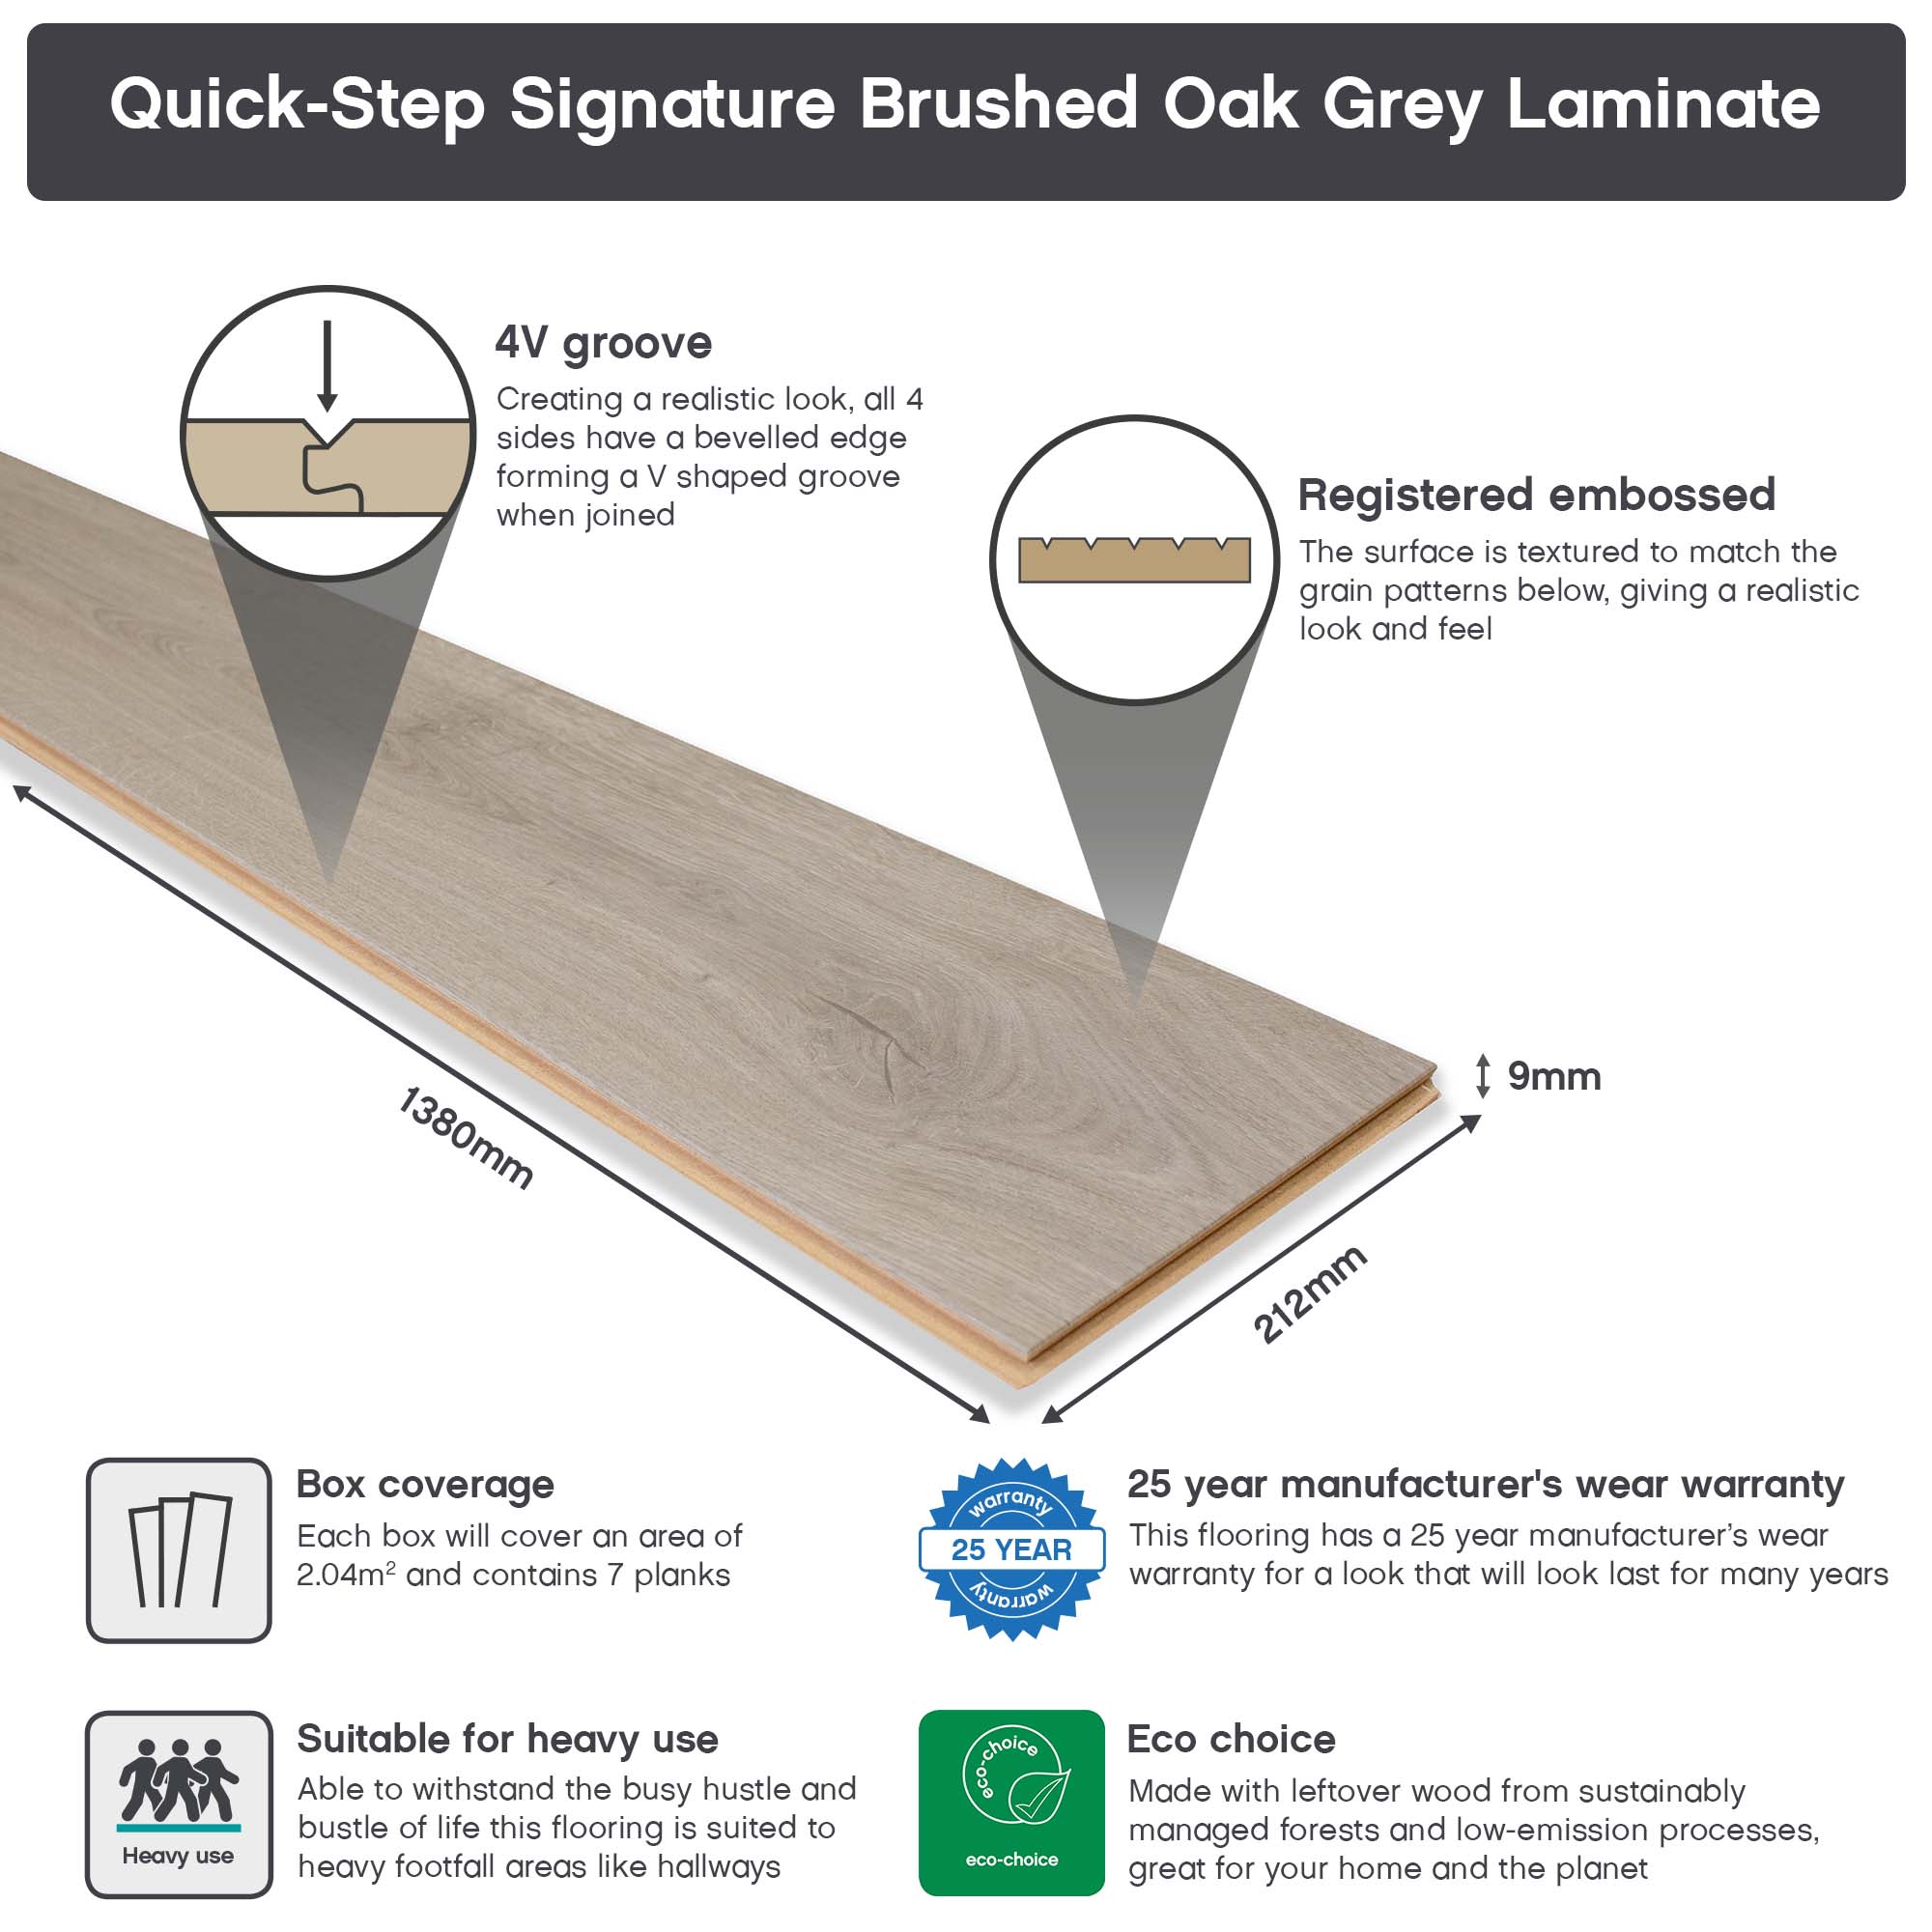 Brushed Oak Grey Quick-Step Perspective Nature Laminate Flooring